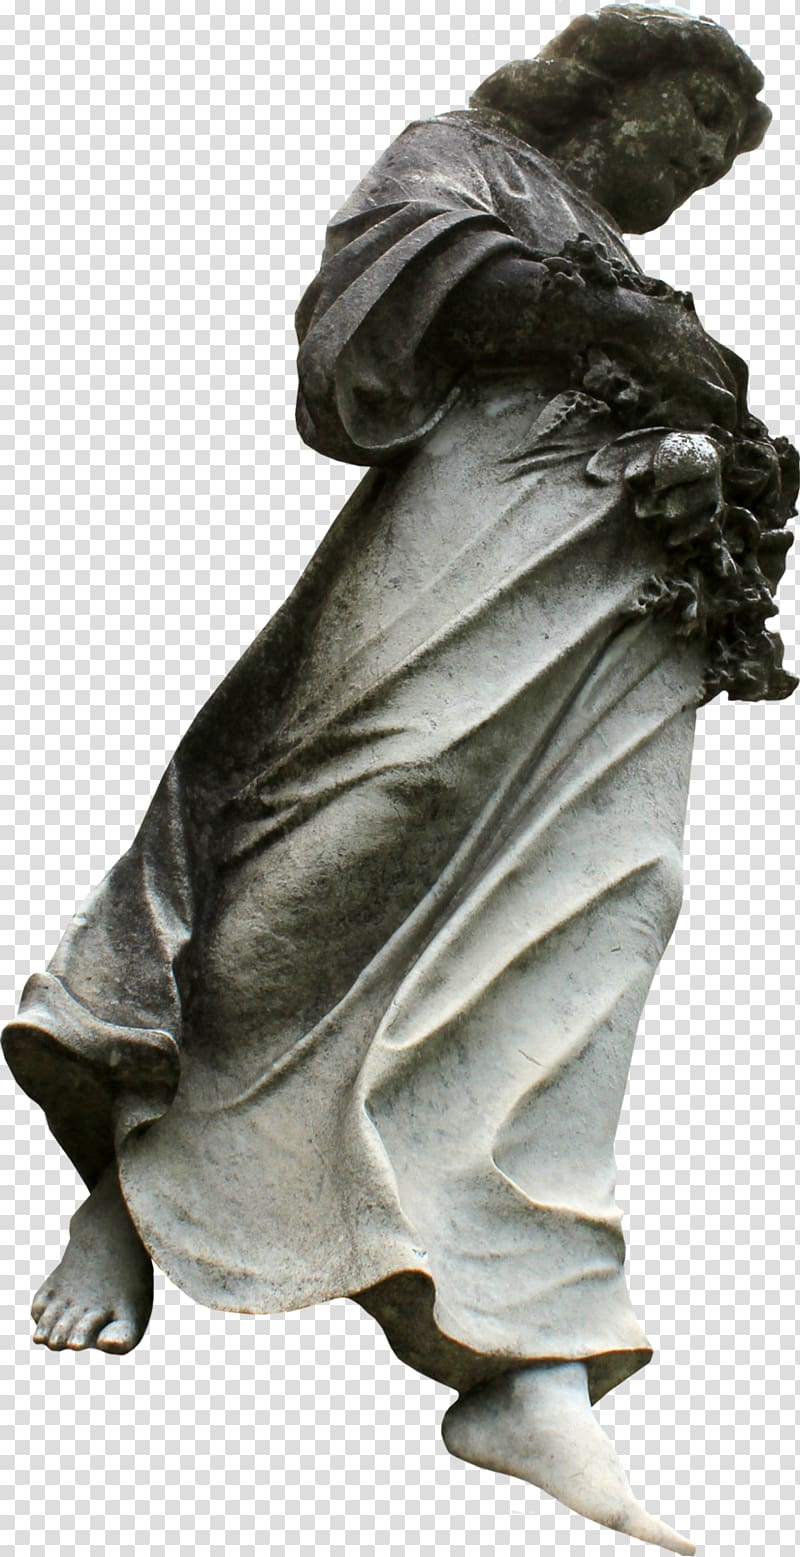 Statue Bronze sculpture Stone carving Classical sculpture, cemetery transparent background PNG clipart